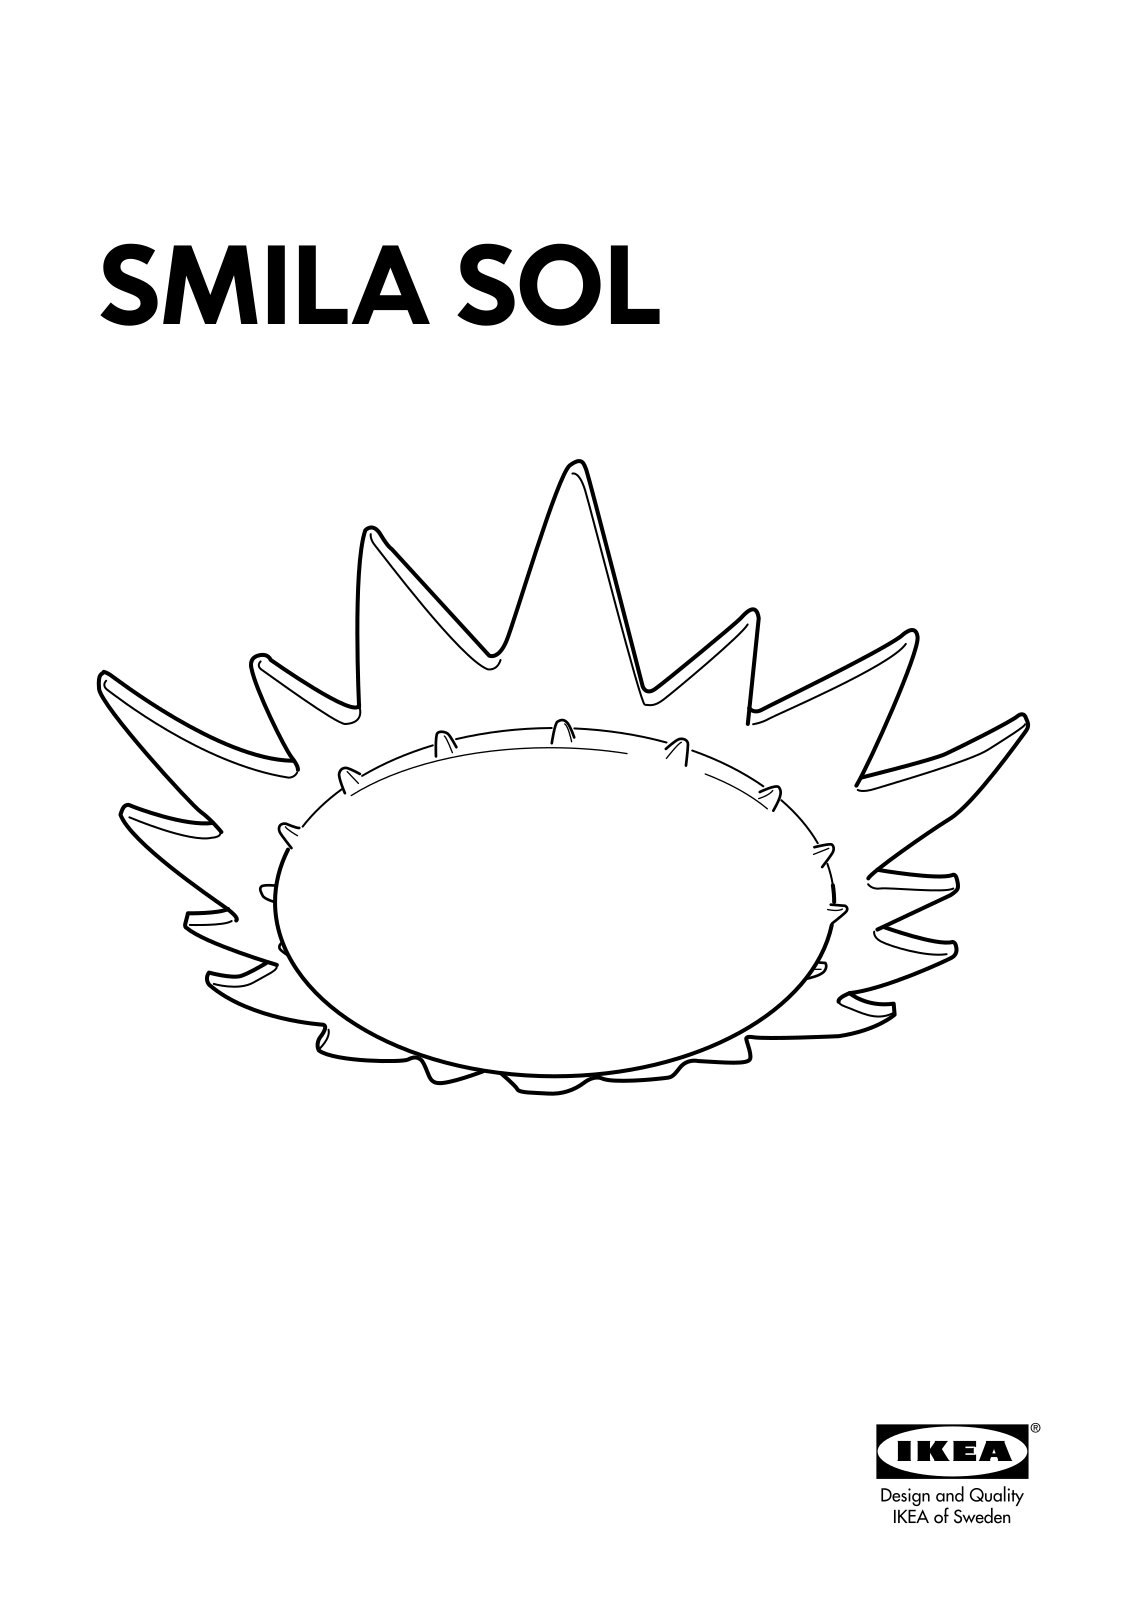 IKEA SMILA SOL User Manual